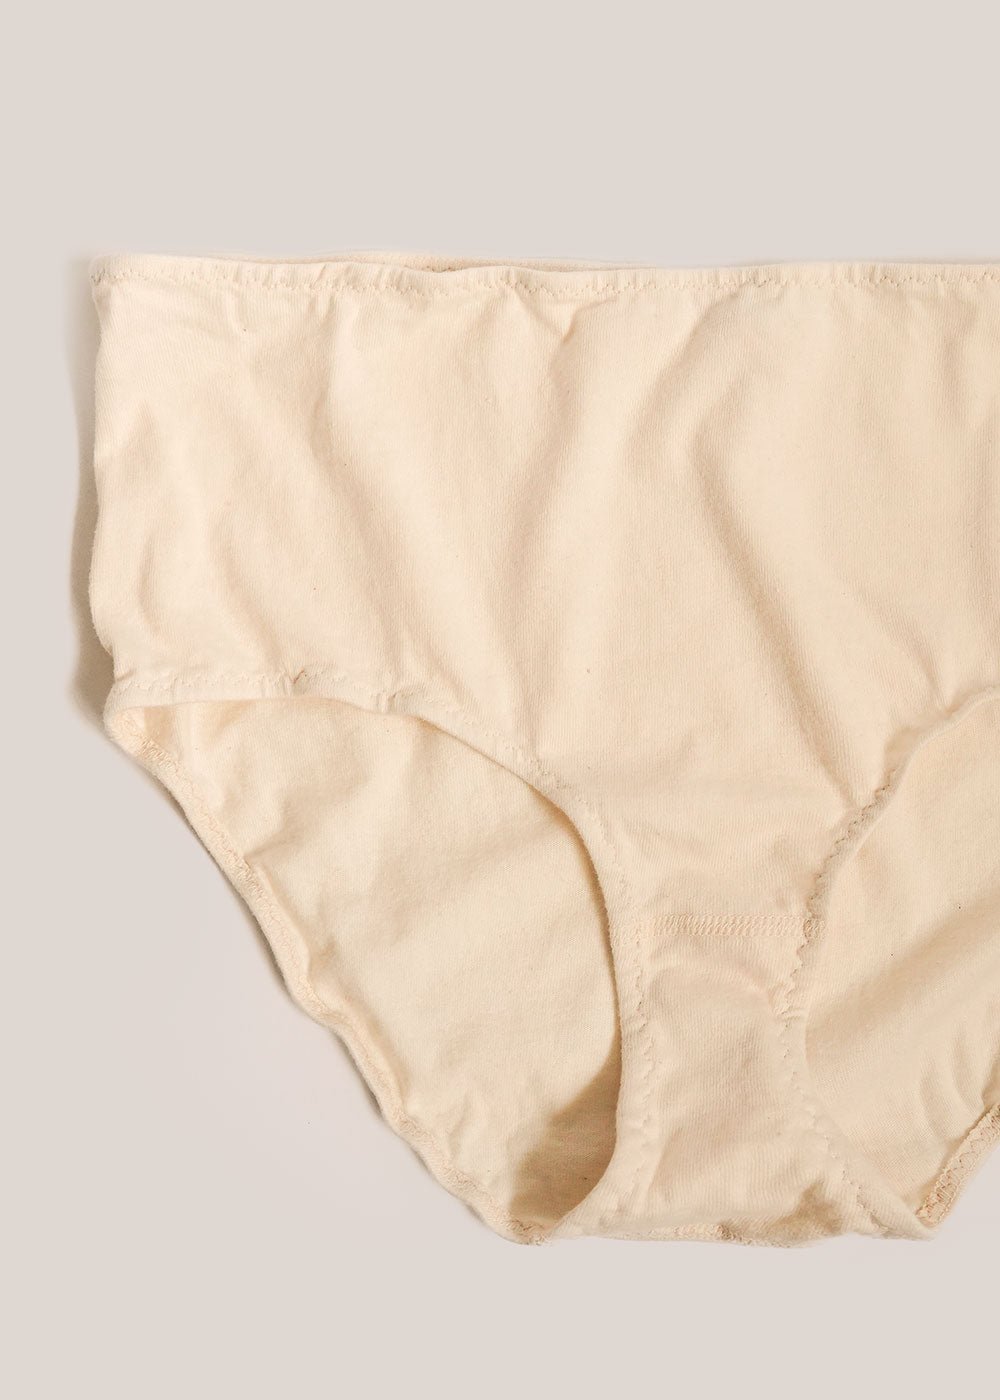 Best Deal for Reshinee Organic Cotton Women's Underwear Breathable Full